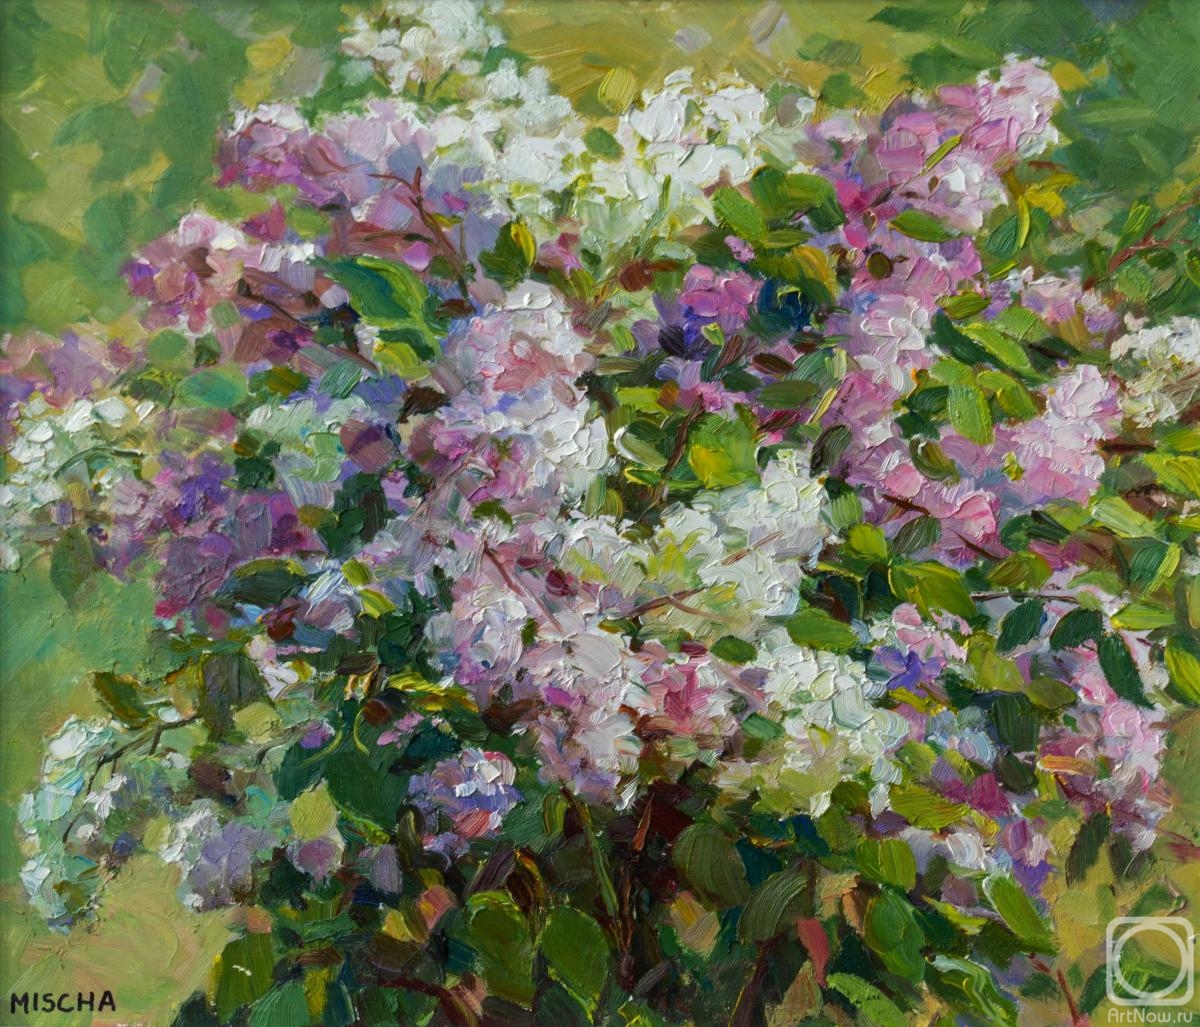 Grigoryan Mike. Lilac. 2015